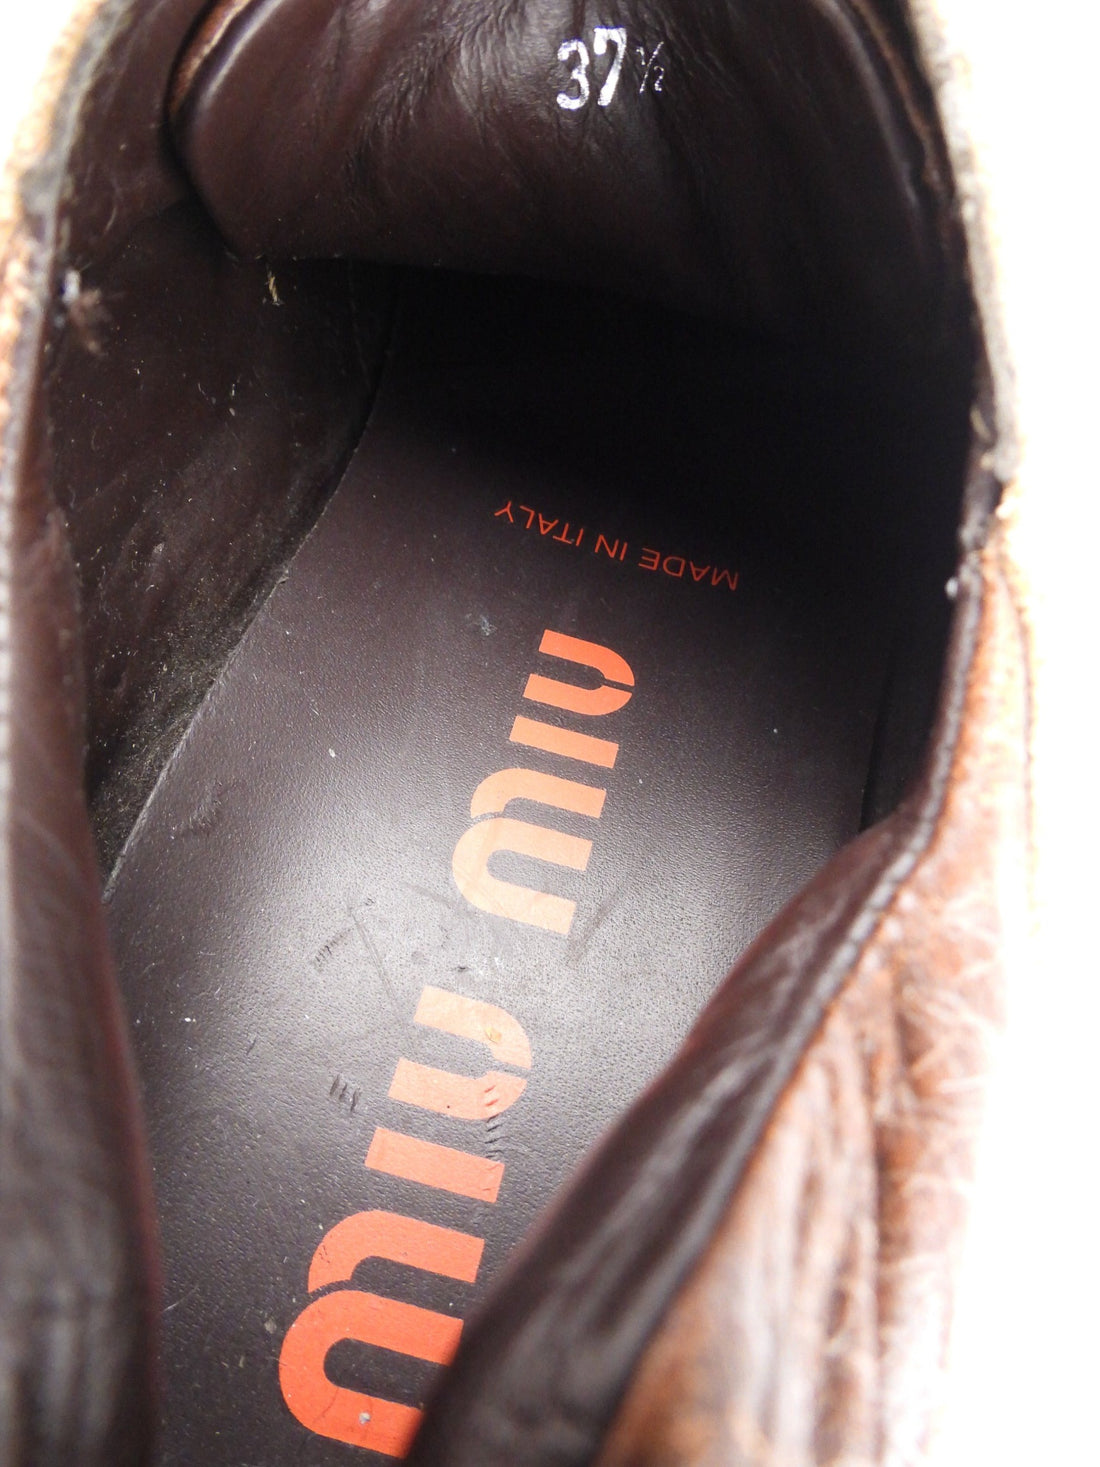 Miu Miu Circa 2000 Vintage Brown Leather Sneakers - 37.5